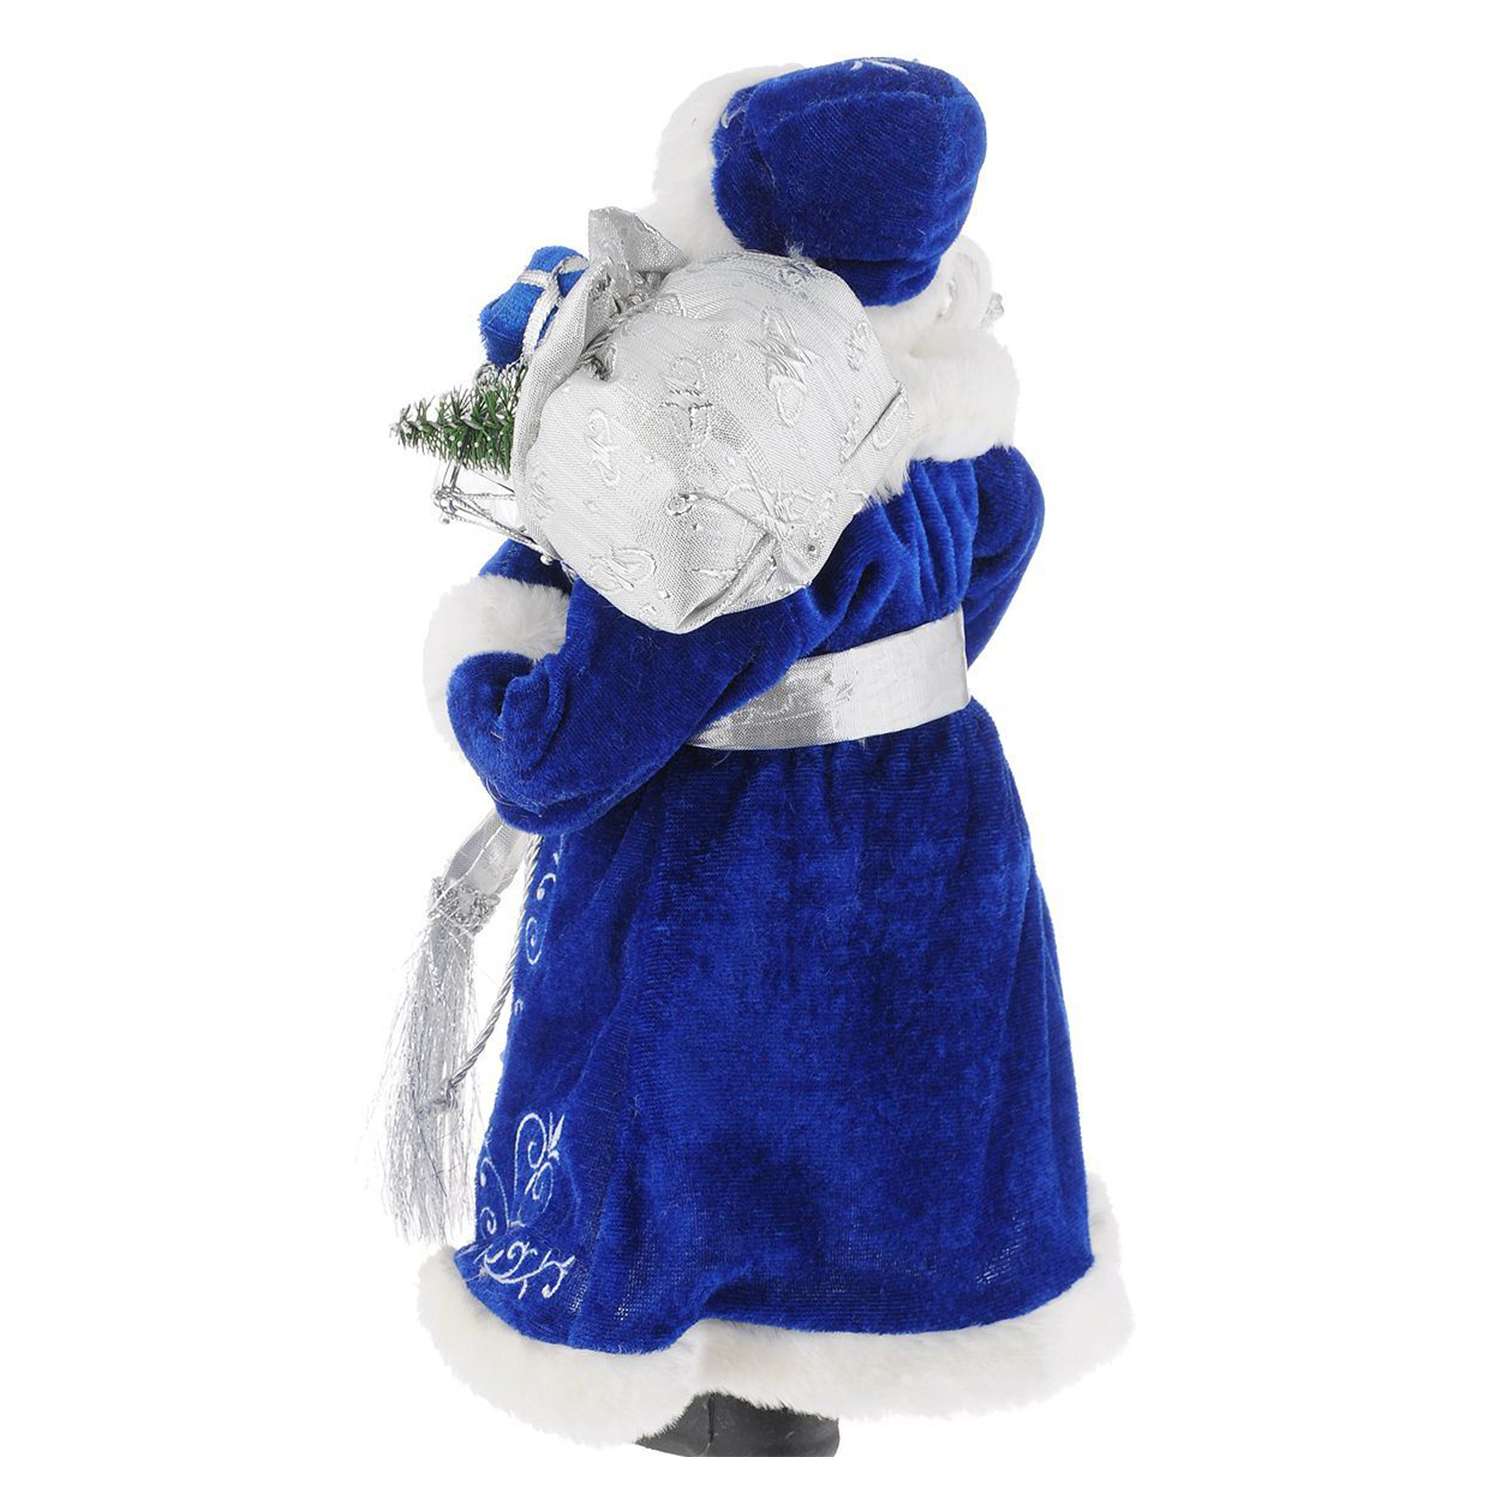 Фигурка новогодняя Magic Time Дед Мороз в синем костюме - фото 2